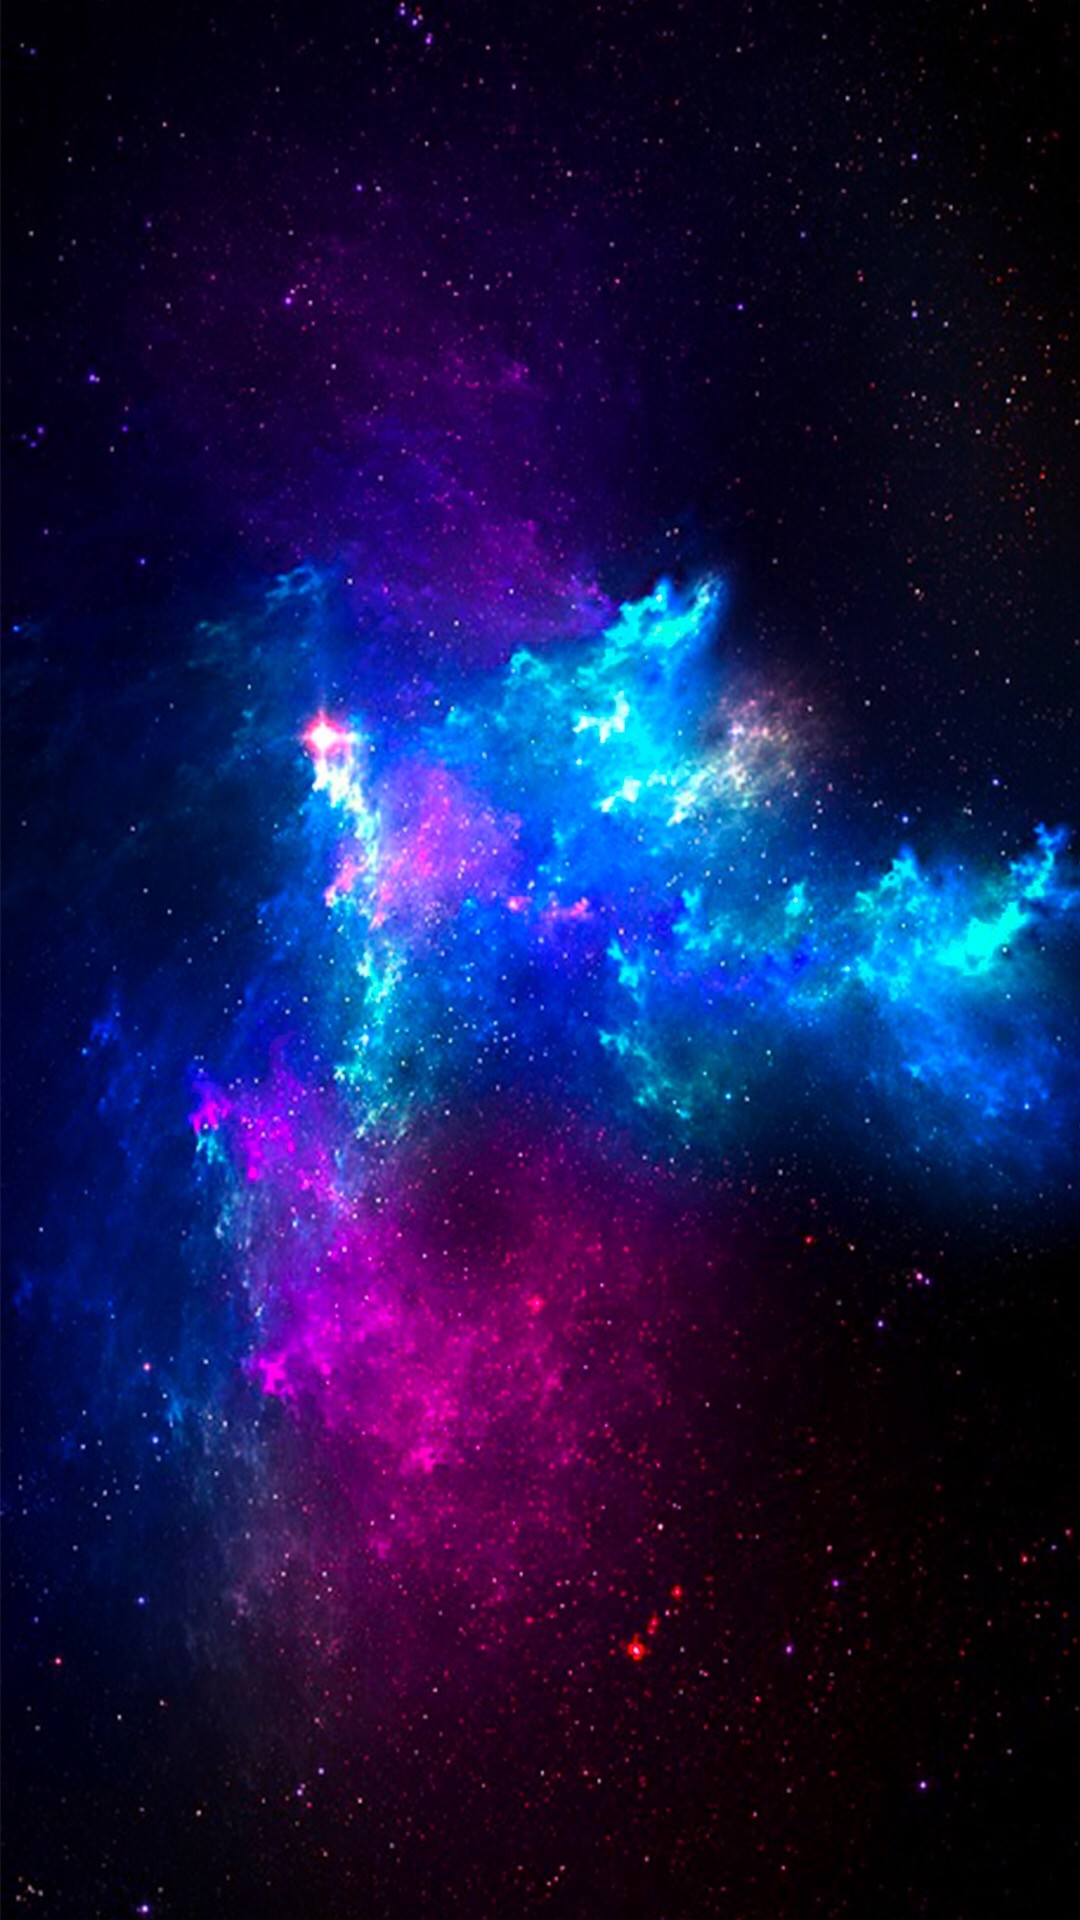 Galaxy Wallpaper, Tumblr Wallpaper, Galaxy Background, Galaxy Space